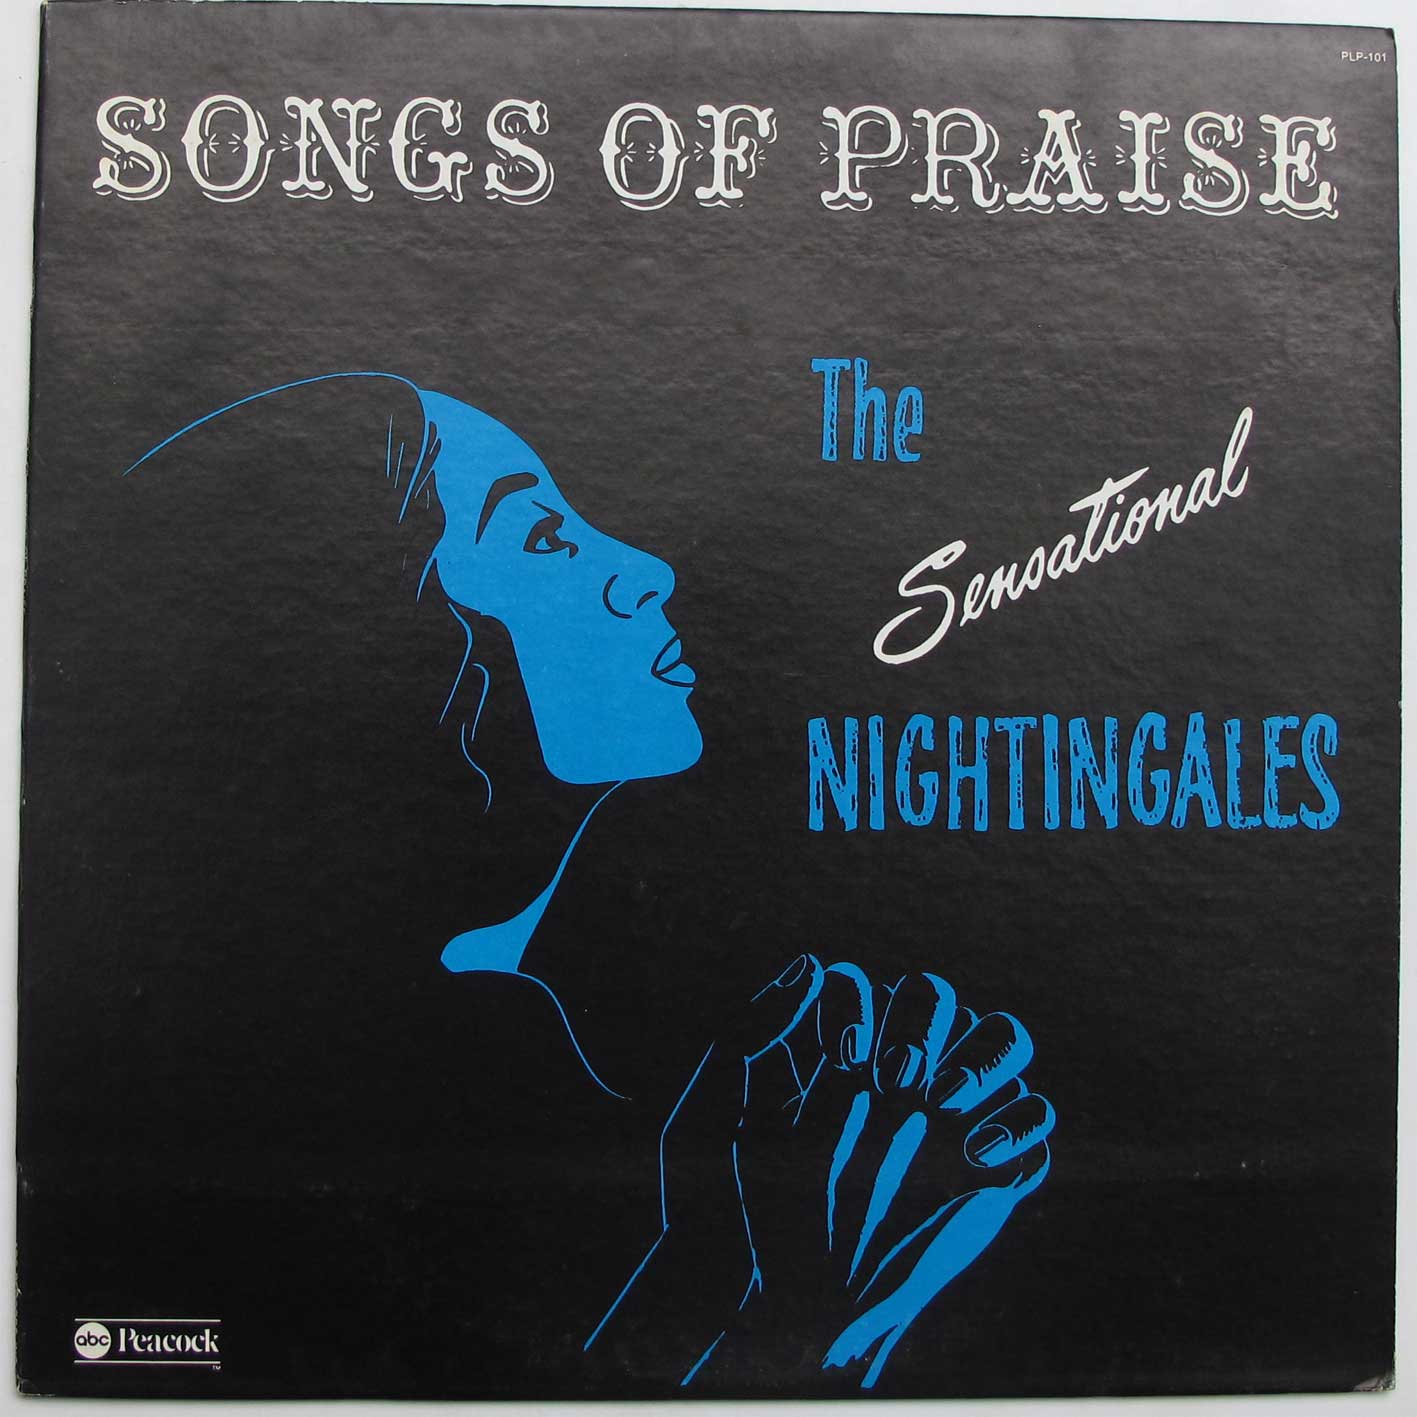 Sensational Nightingales,The / Songs Of Praiseβ